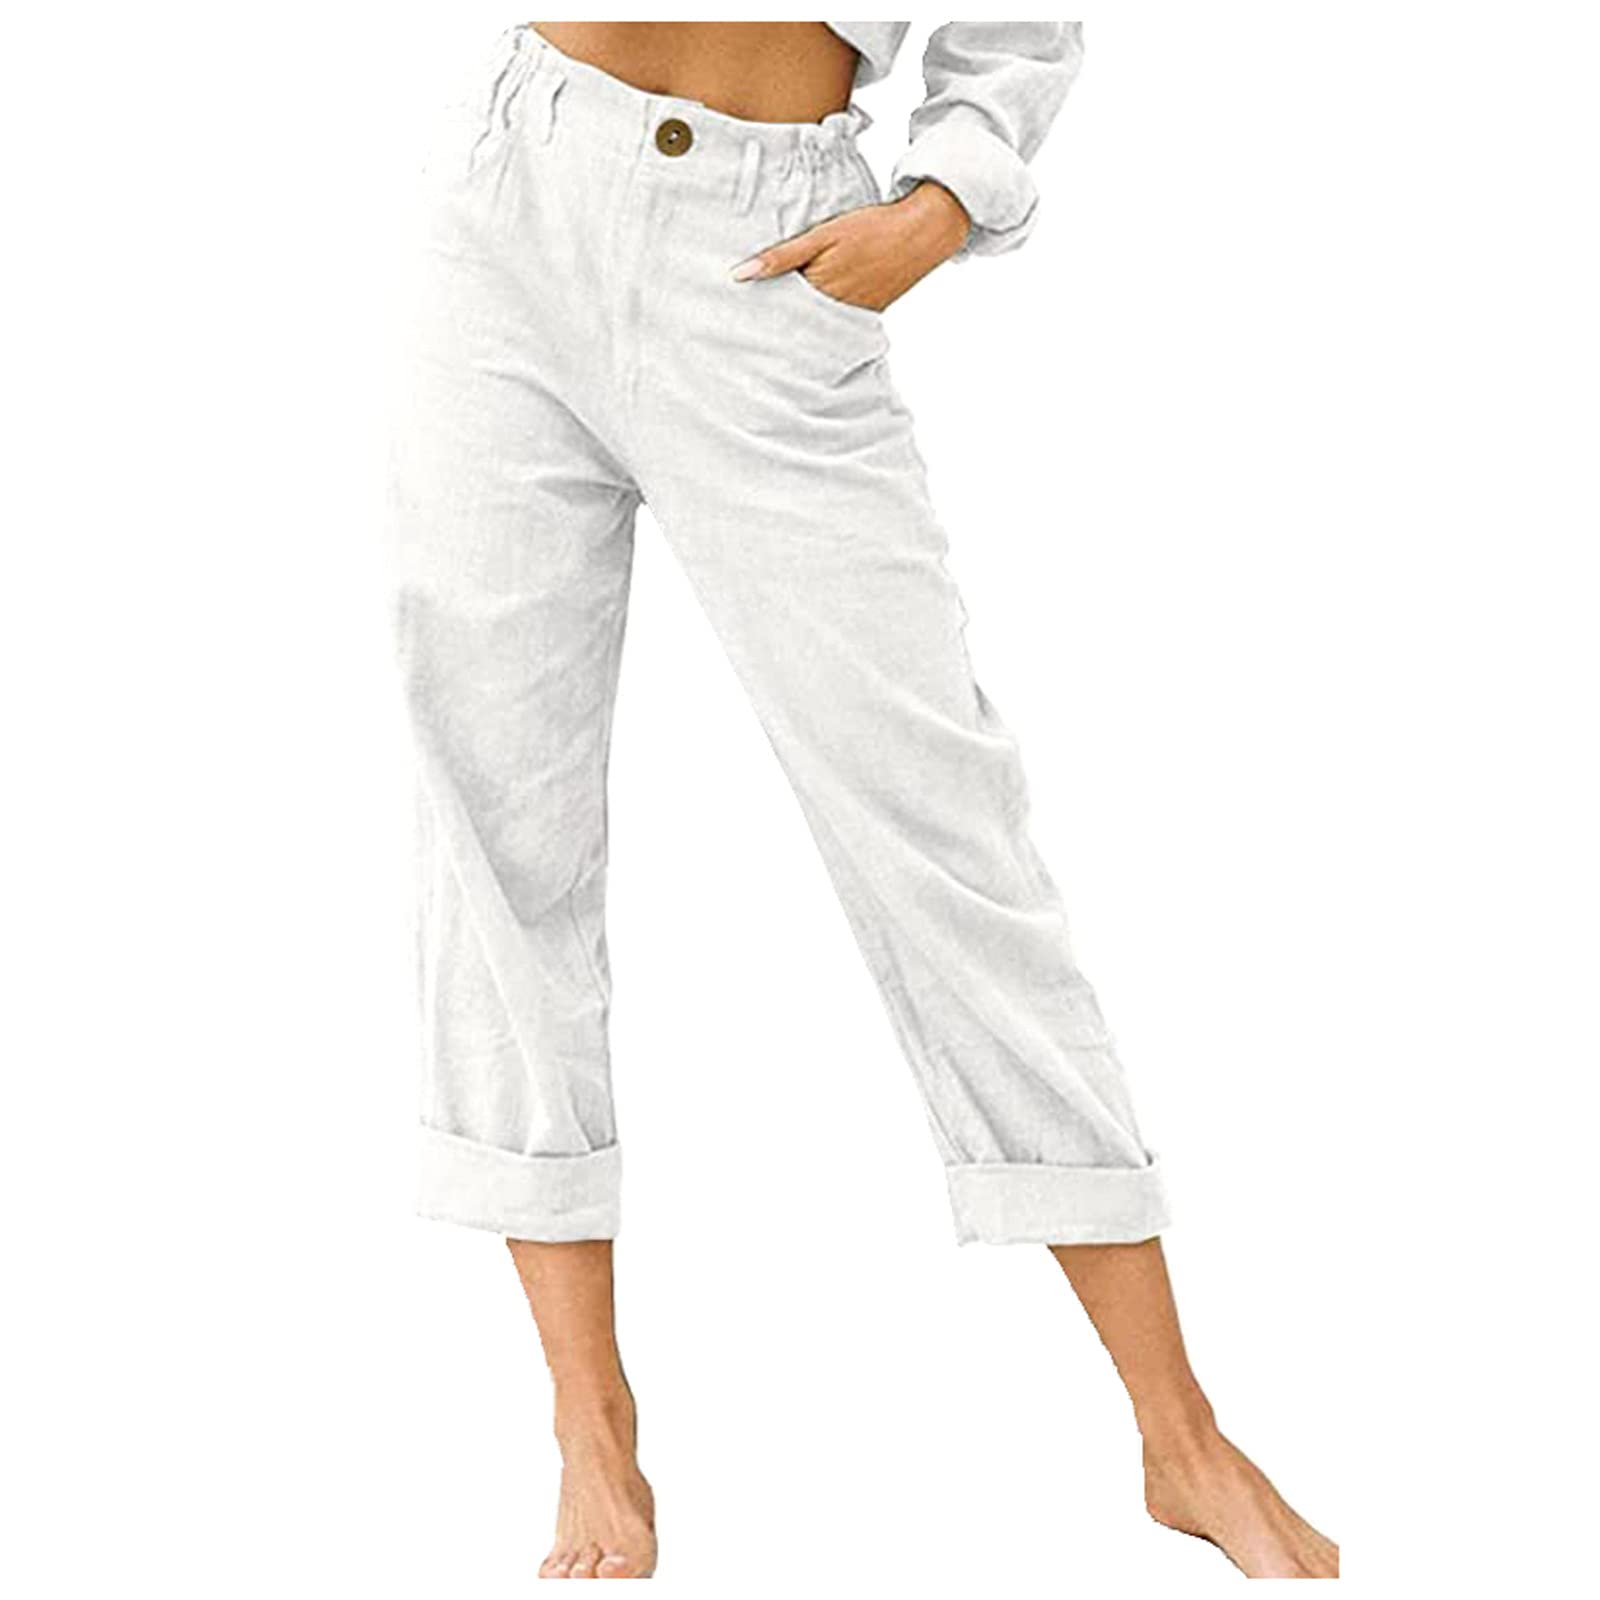 beshionljs Womens Cotton Linen Pants Elastic High Waist Capri